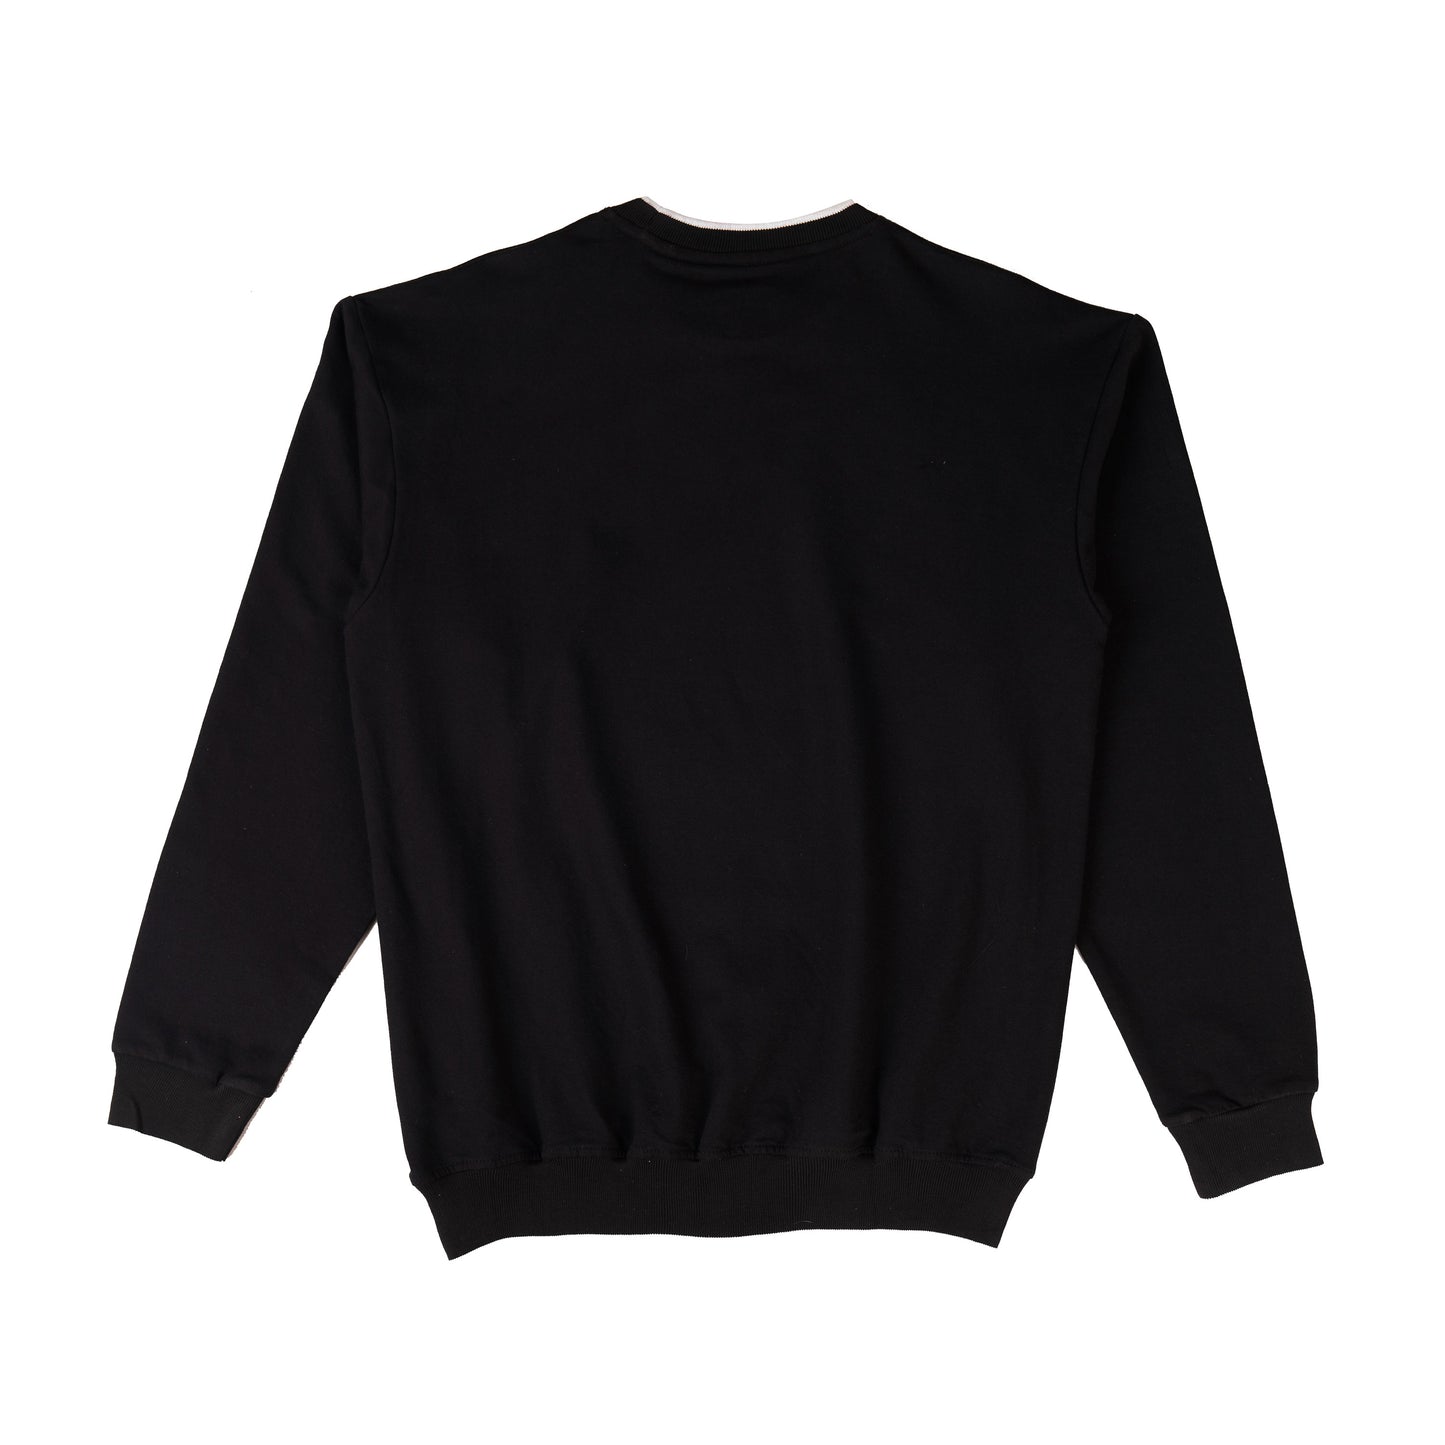 AZA Sweater Crewneck Dark Series - Black